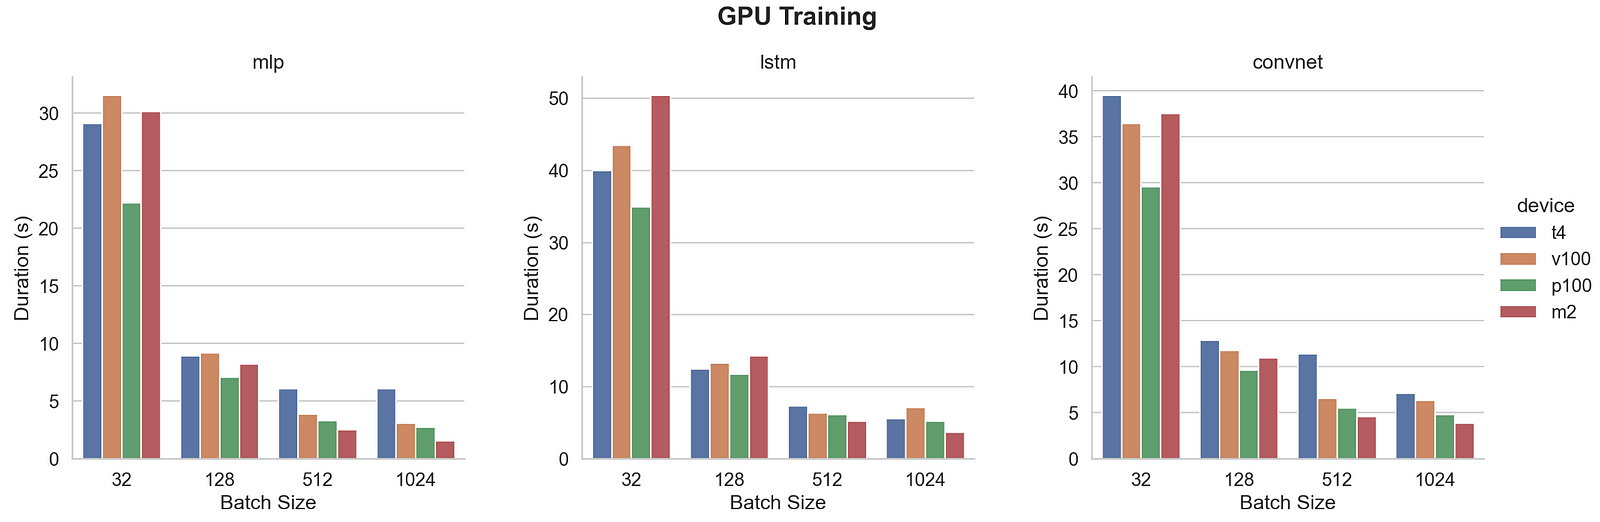 Running PyTorch on the M1 GPU